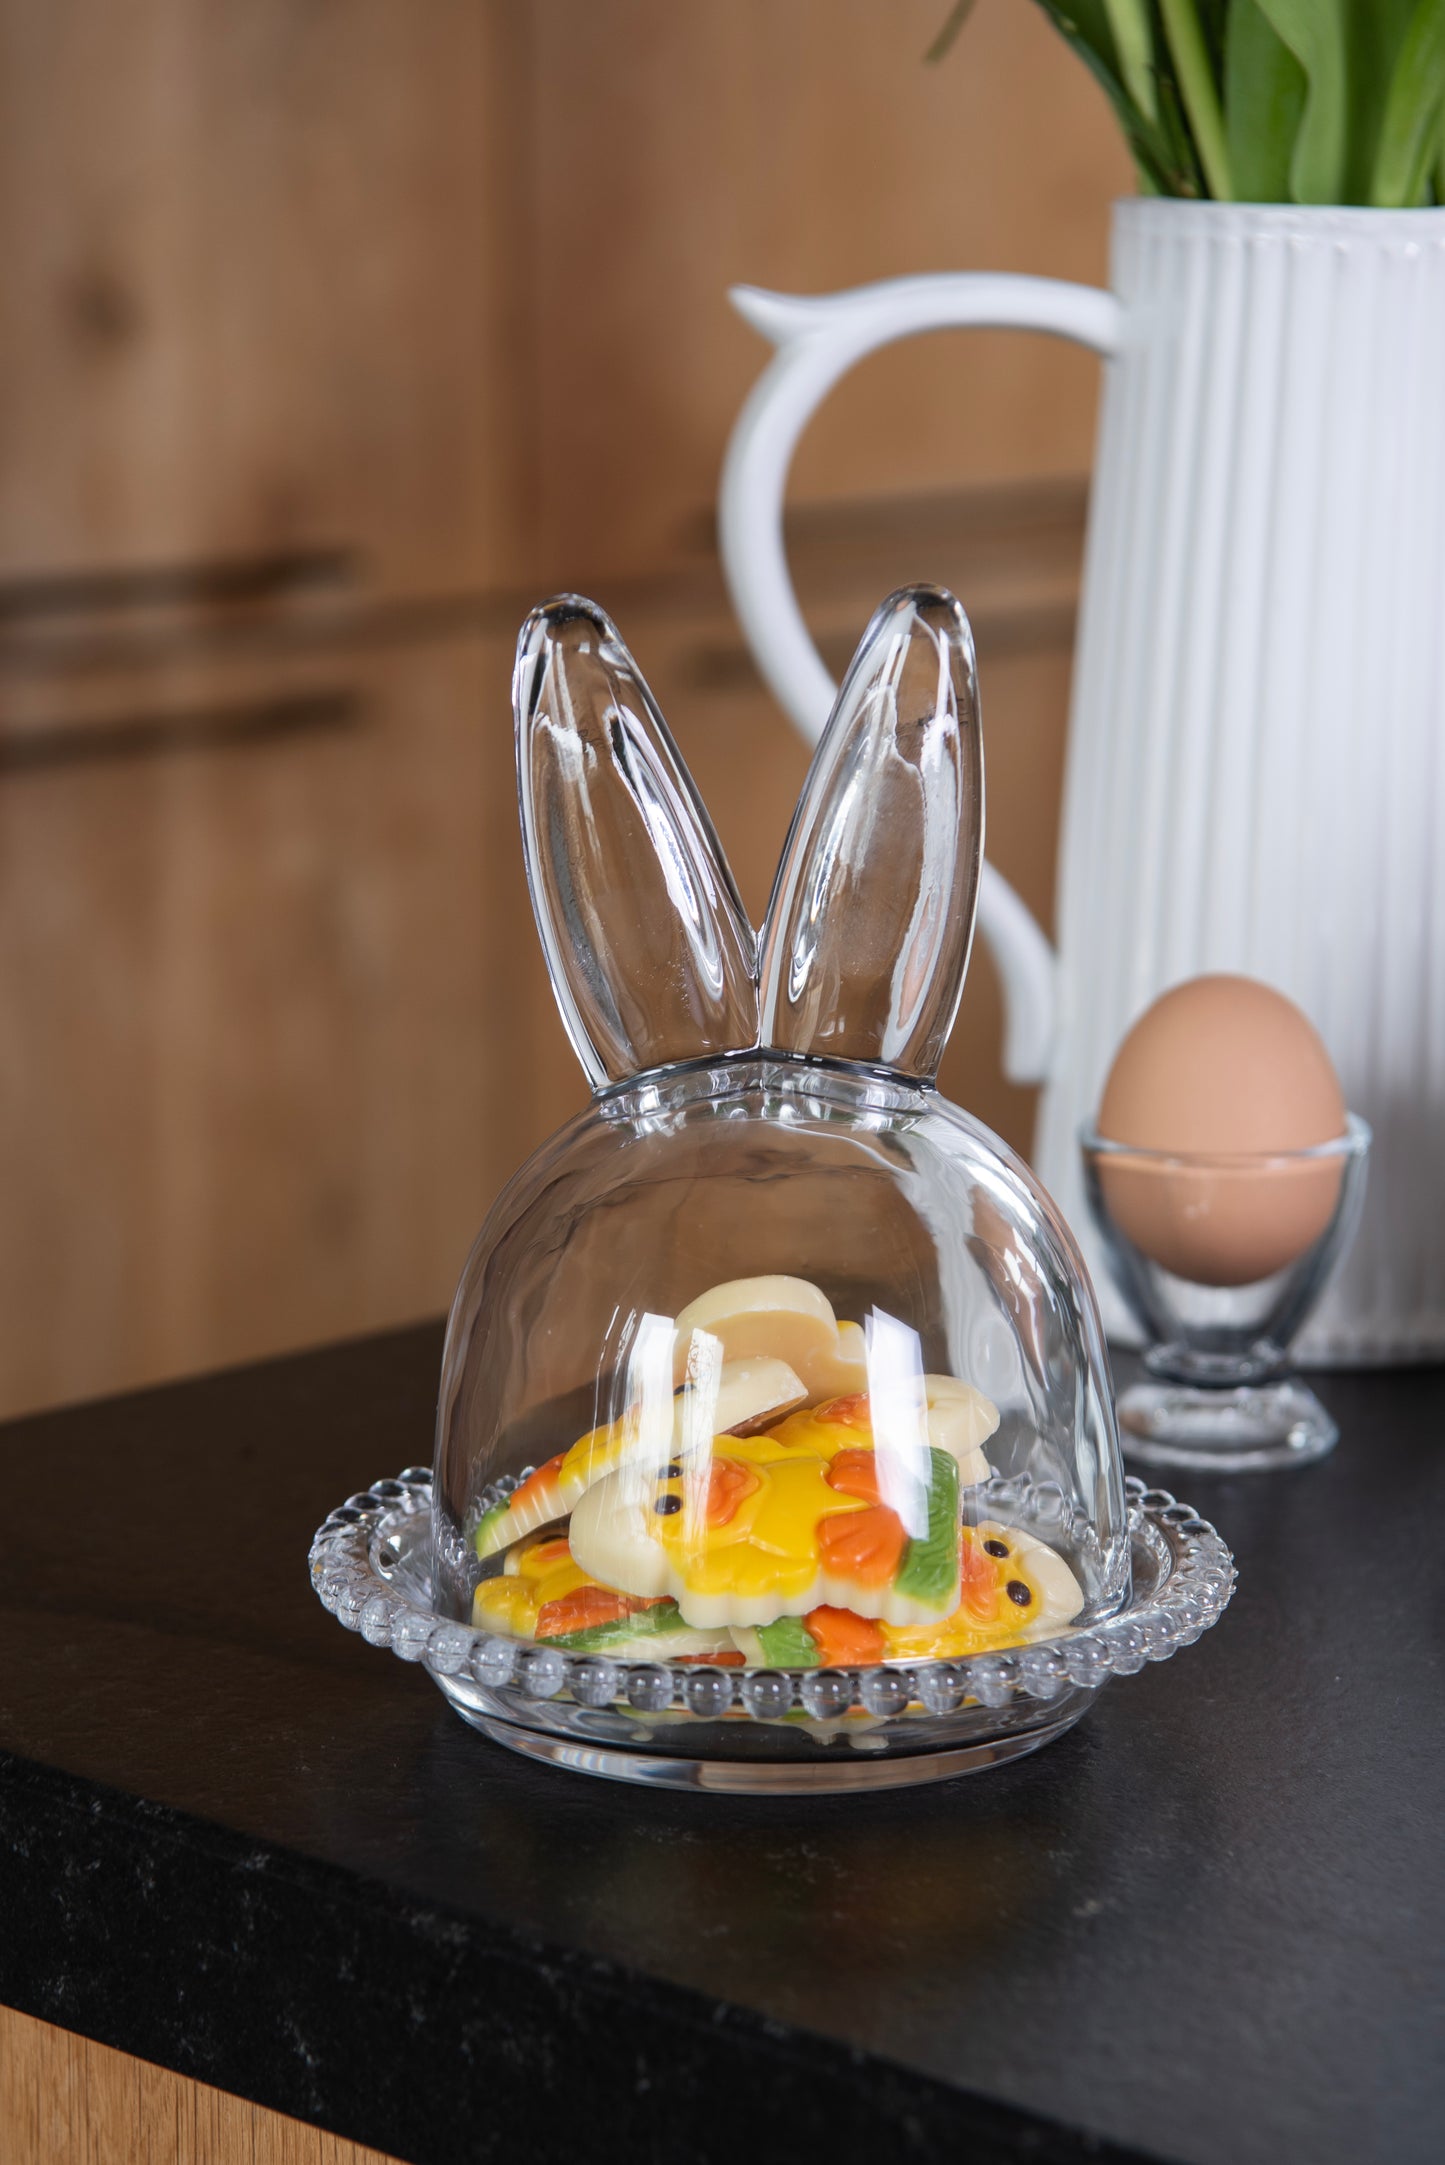 Glass Dome Bunny Cloche Bell Jar